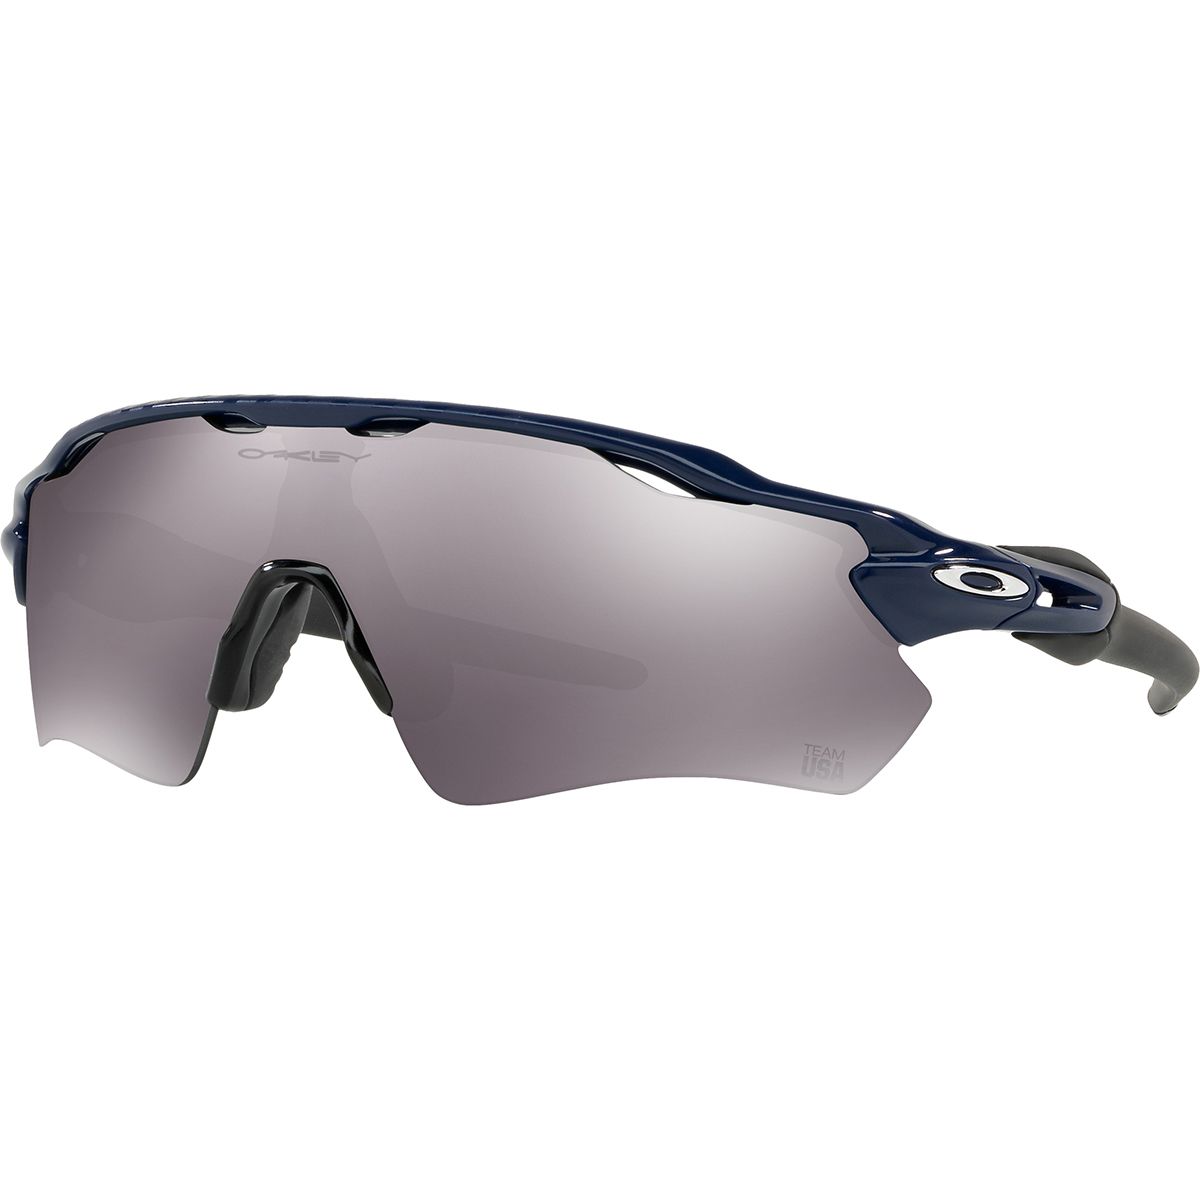 Oakley Team USA Radar EV Path Sunglasses - Men's